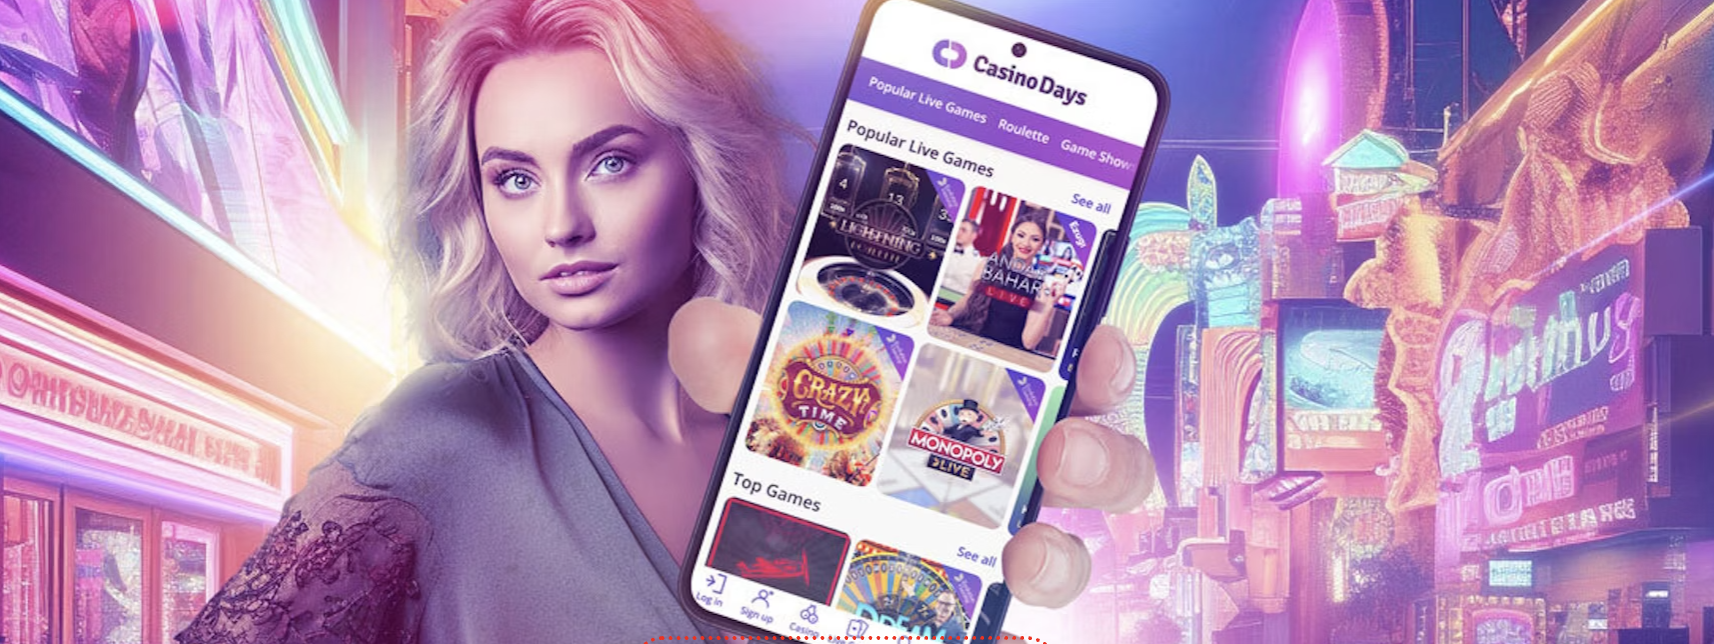 Casino Days App